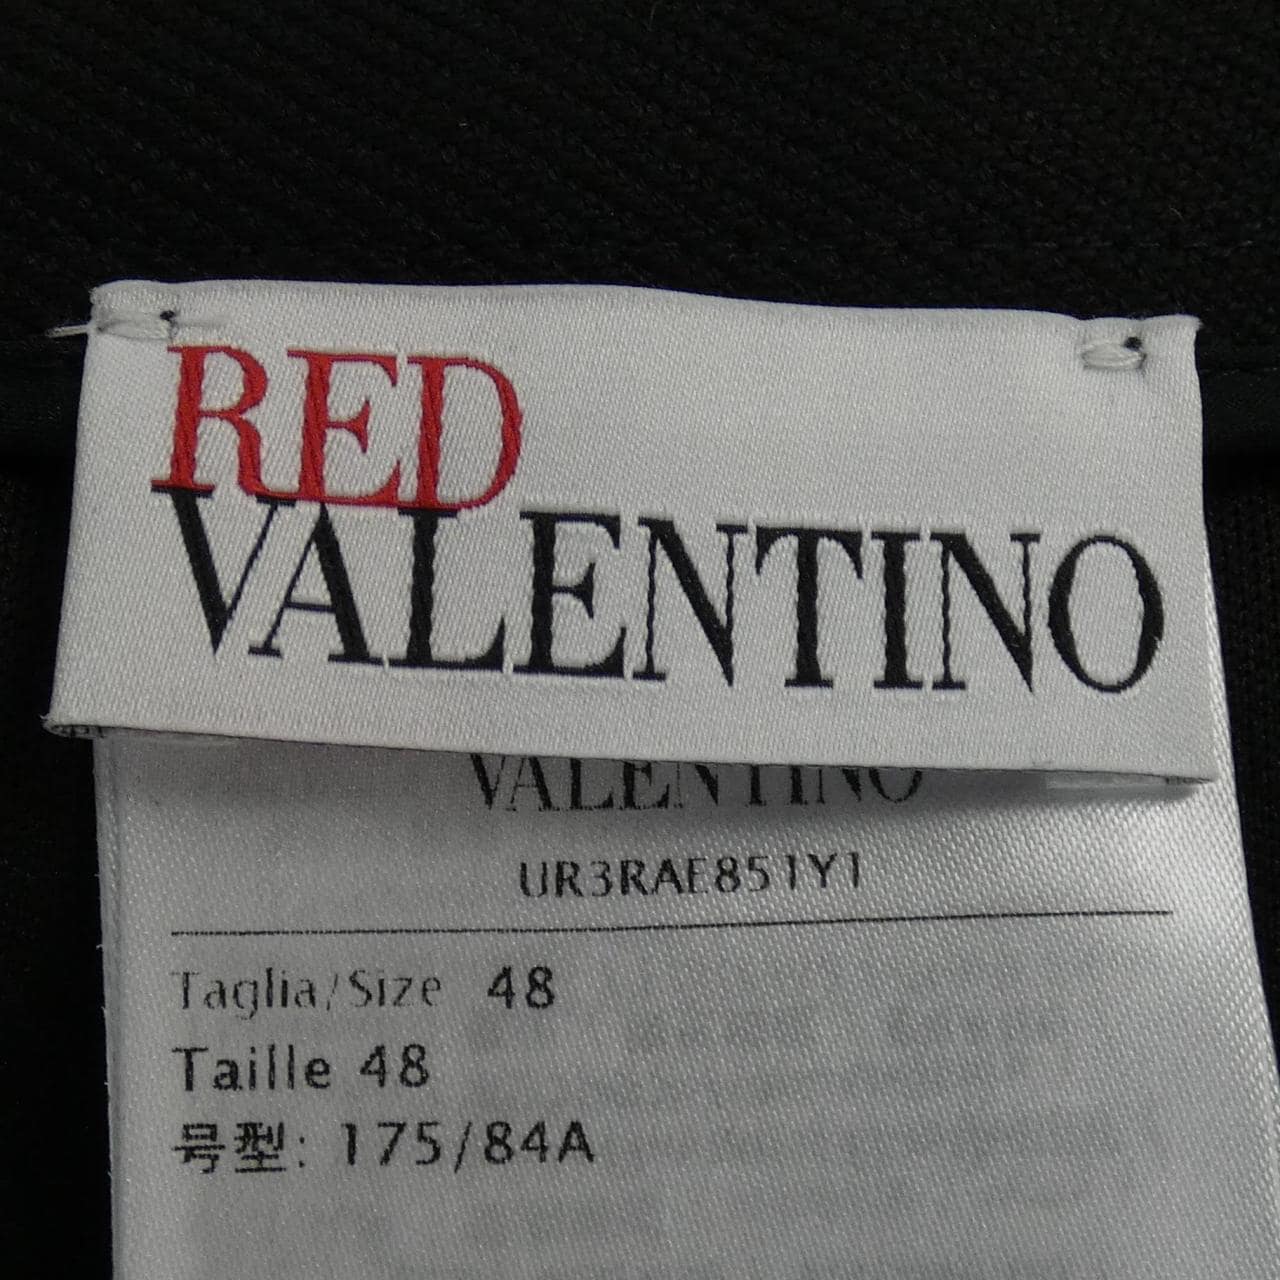 RED VALENTINO VALENTINO 半身裙